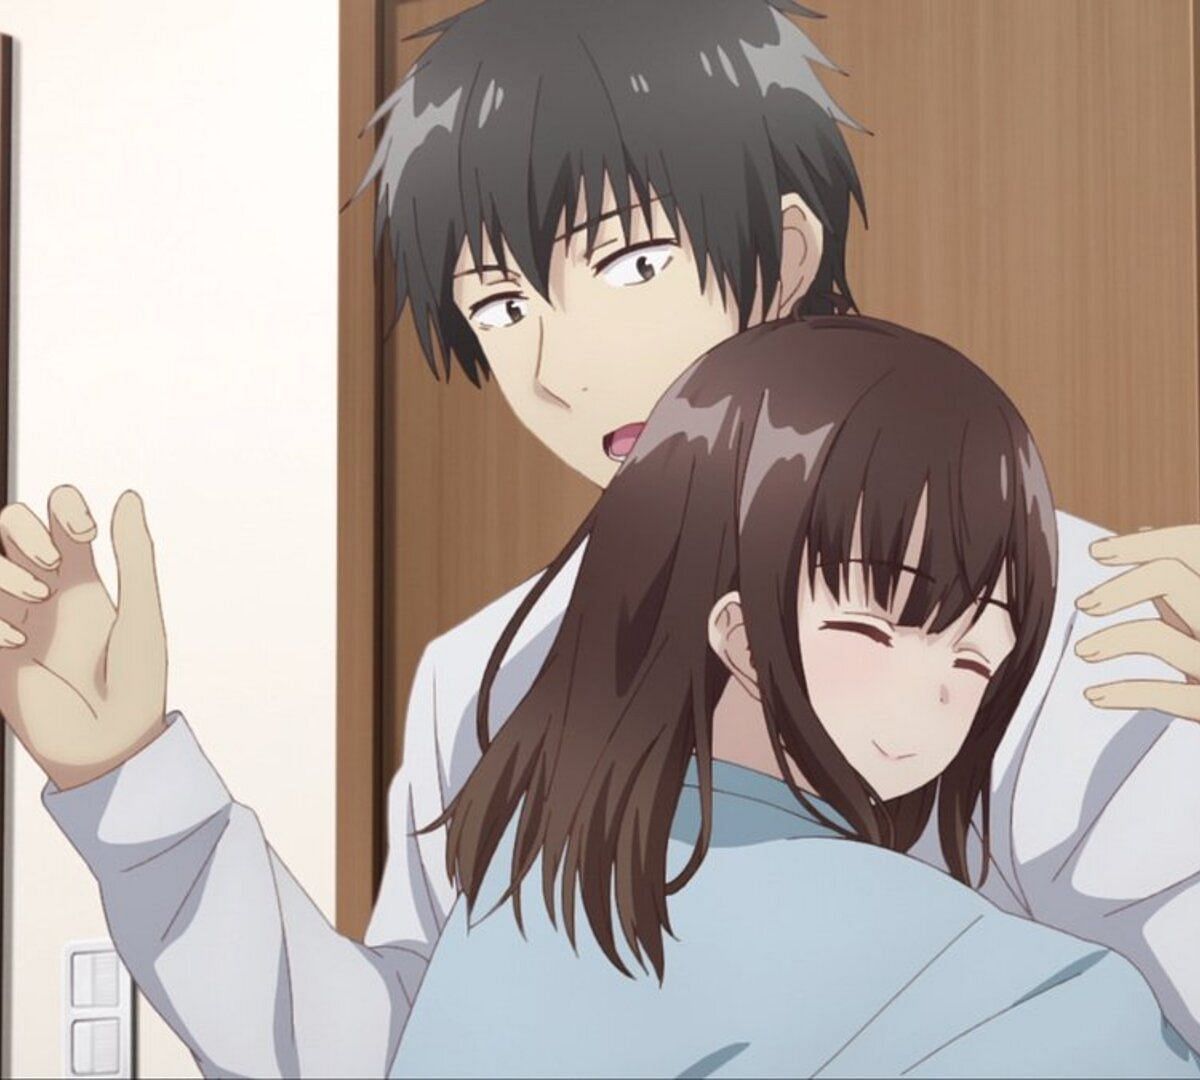 Sayu Ogiwara and Yoshida as seen in the anime (Image via Project No. 9)